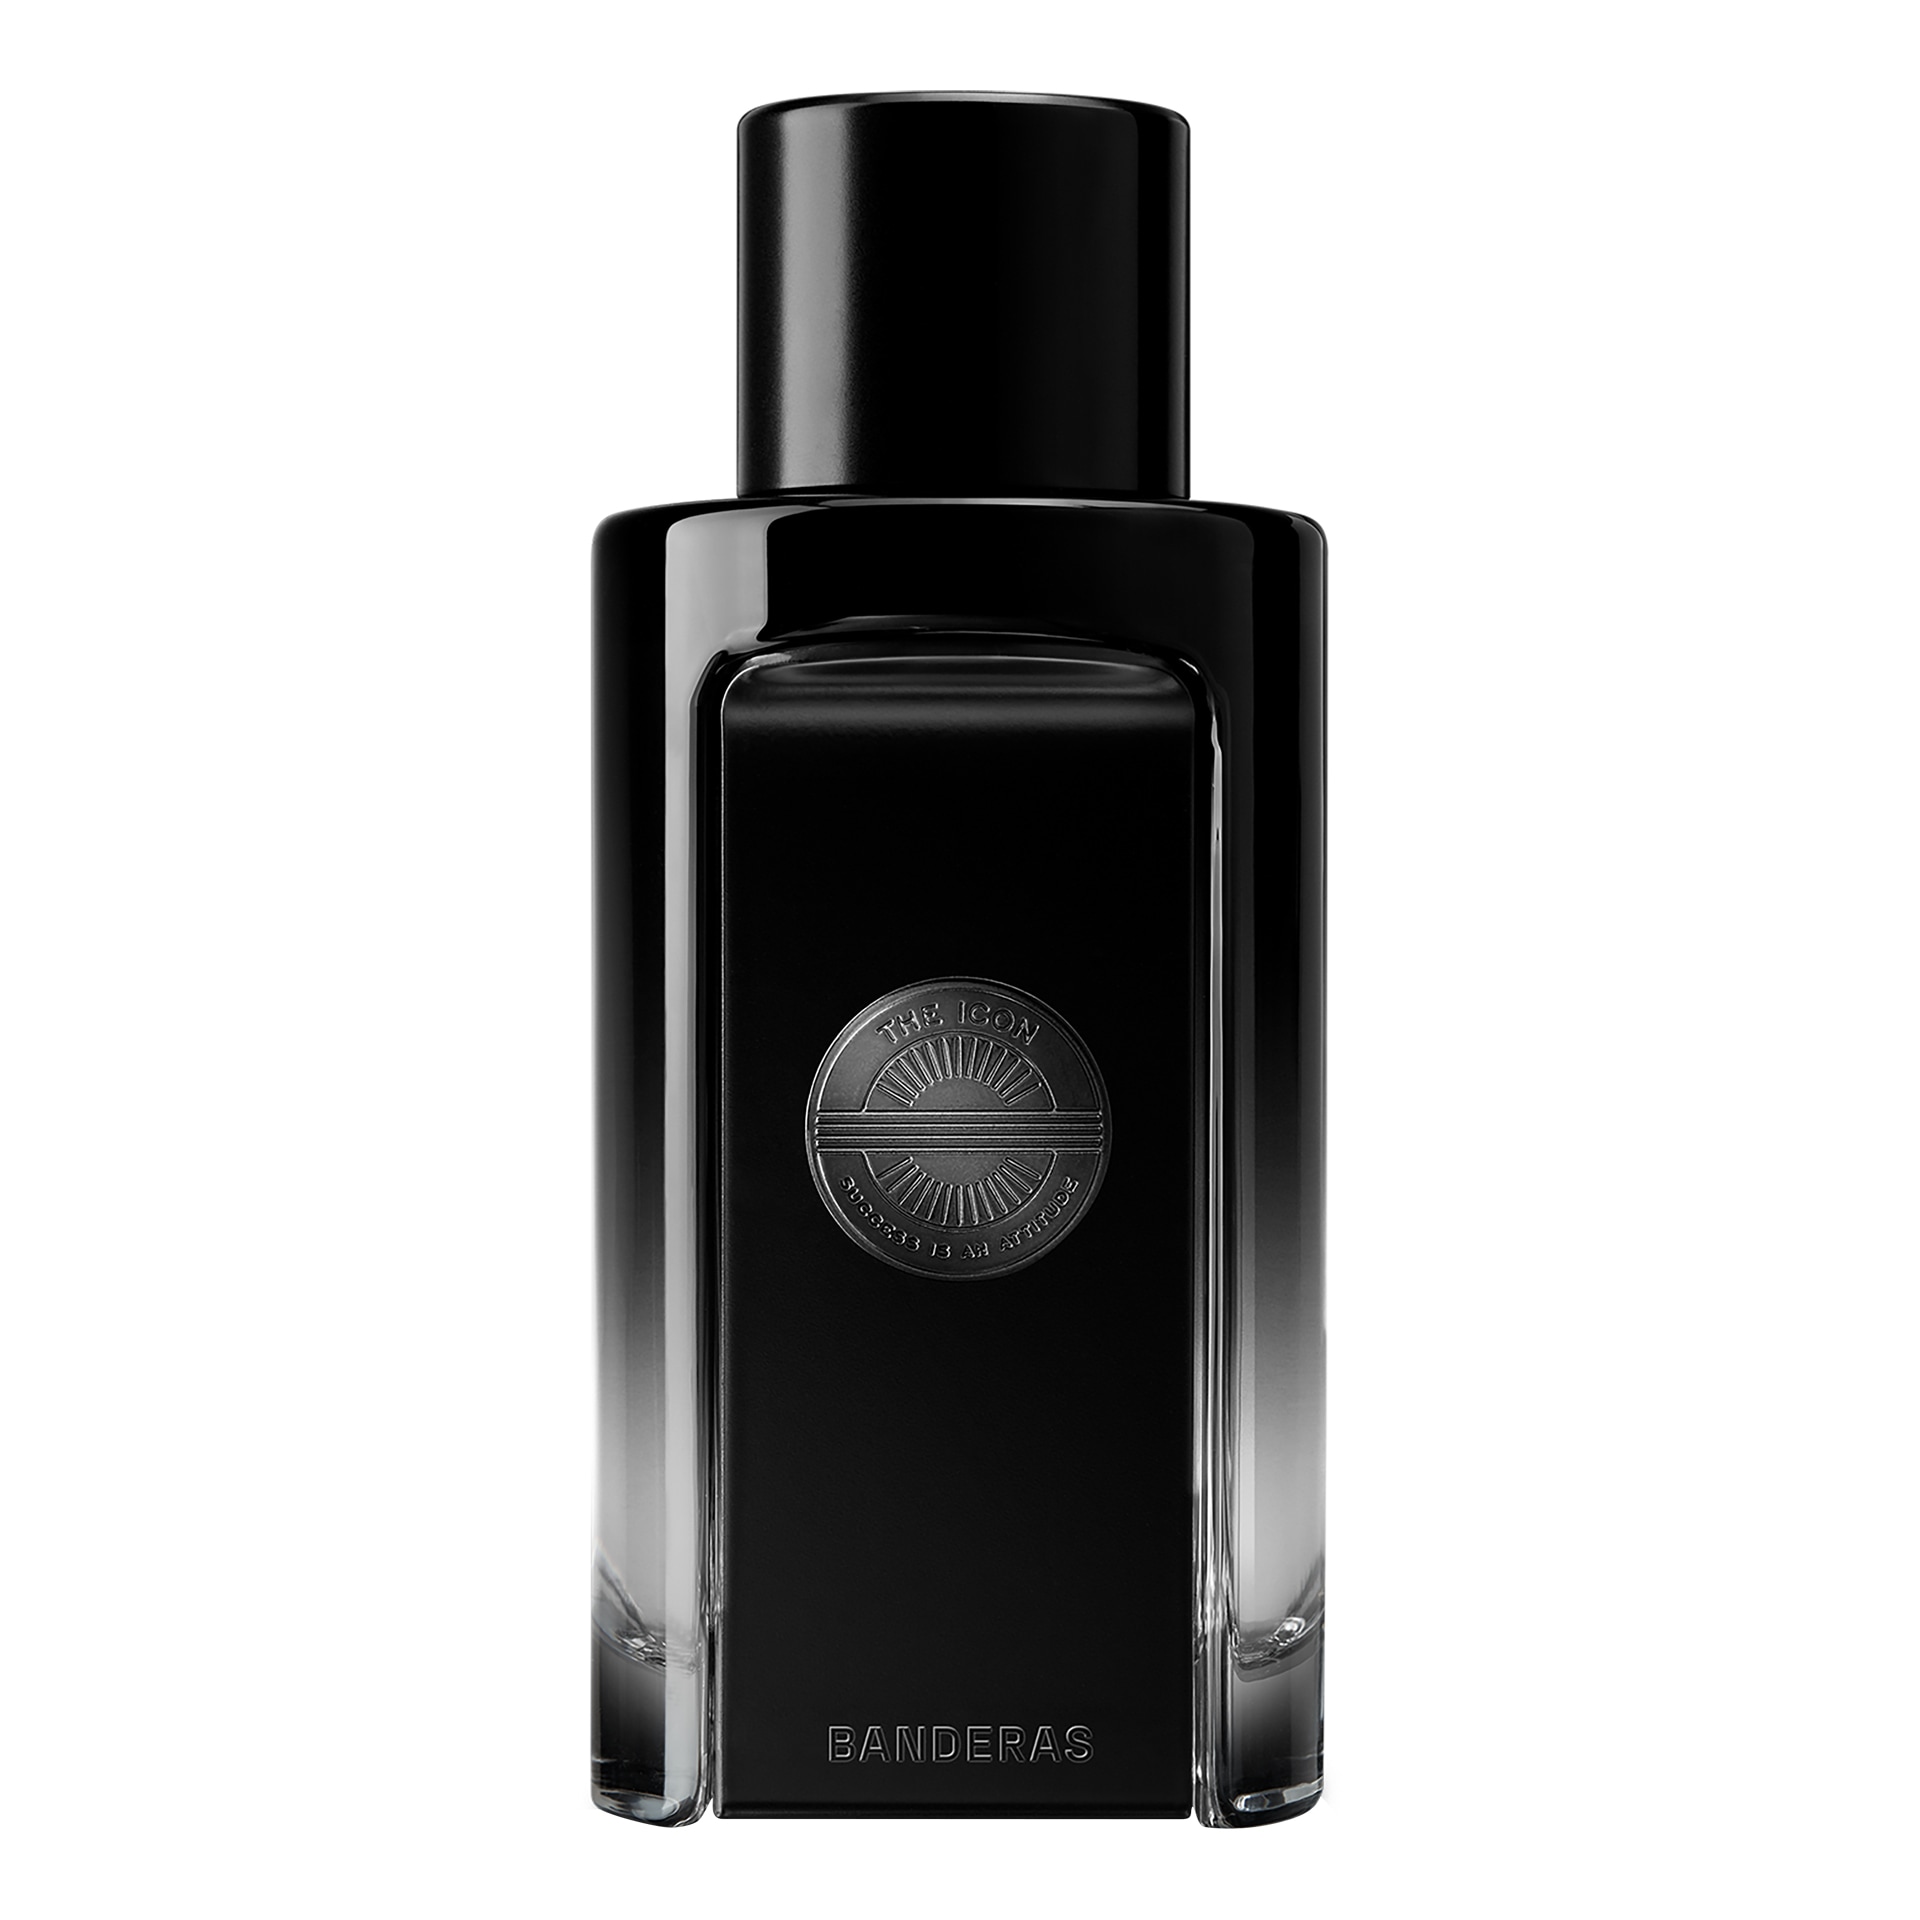 Вода парфюмерная Banderas The Icon Perfume, 100 мл армия сталина и жукова как надо побеждать